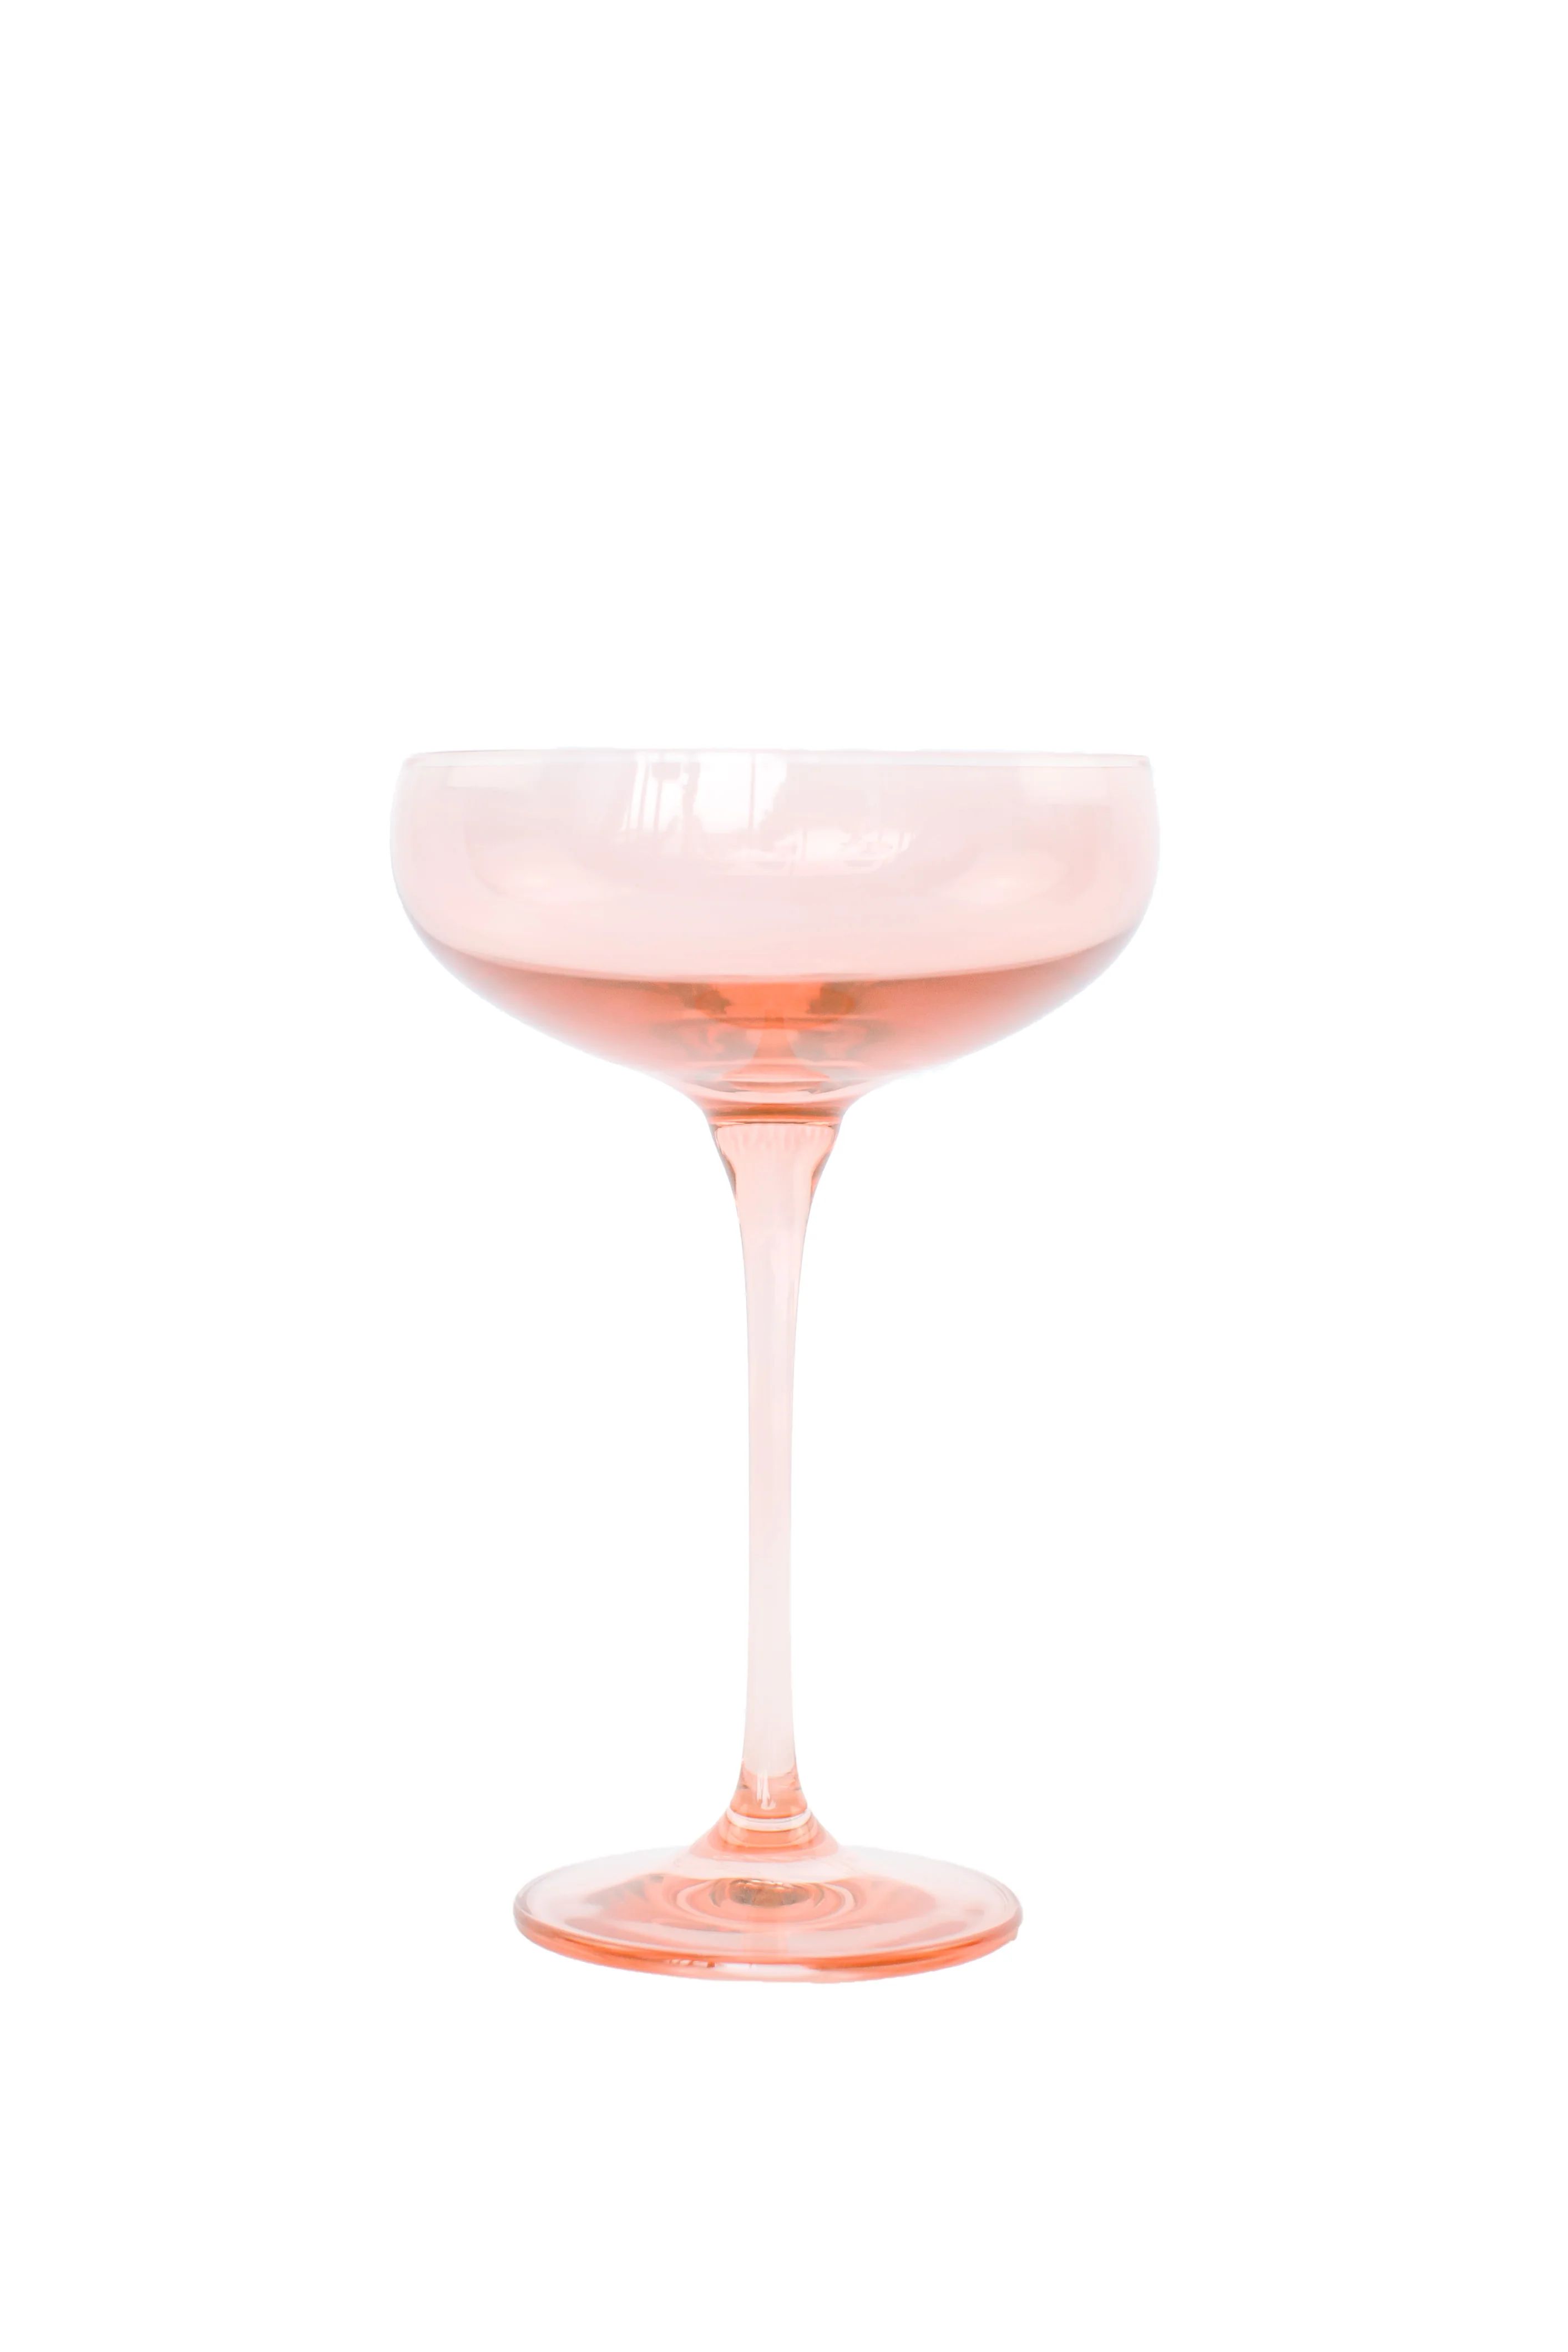 Estelle Colored Champagne Coupe Stemware - Set of 2 {Blush Pink} | Estelle Colored Glass